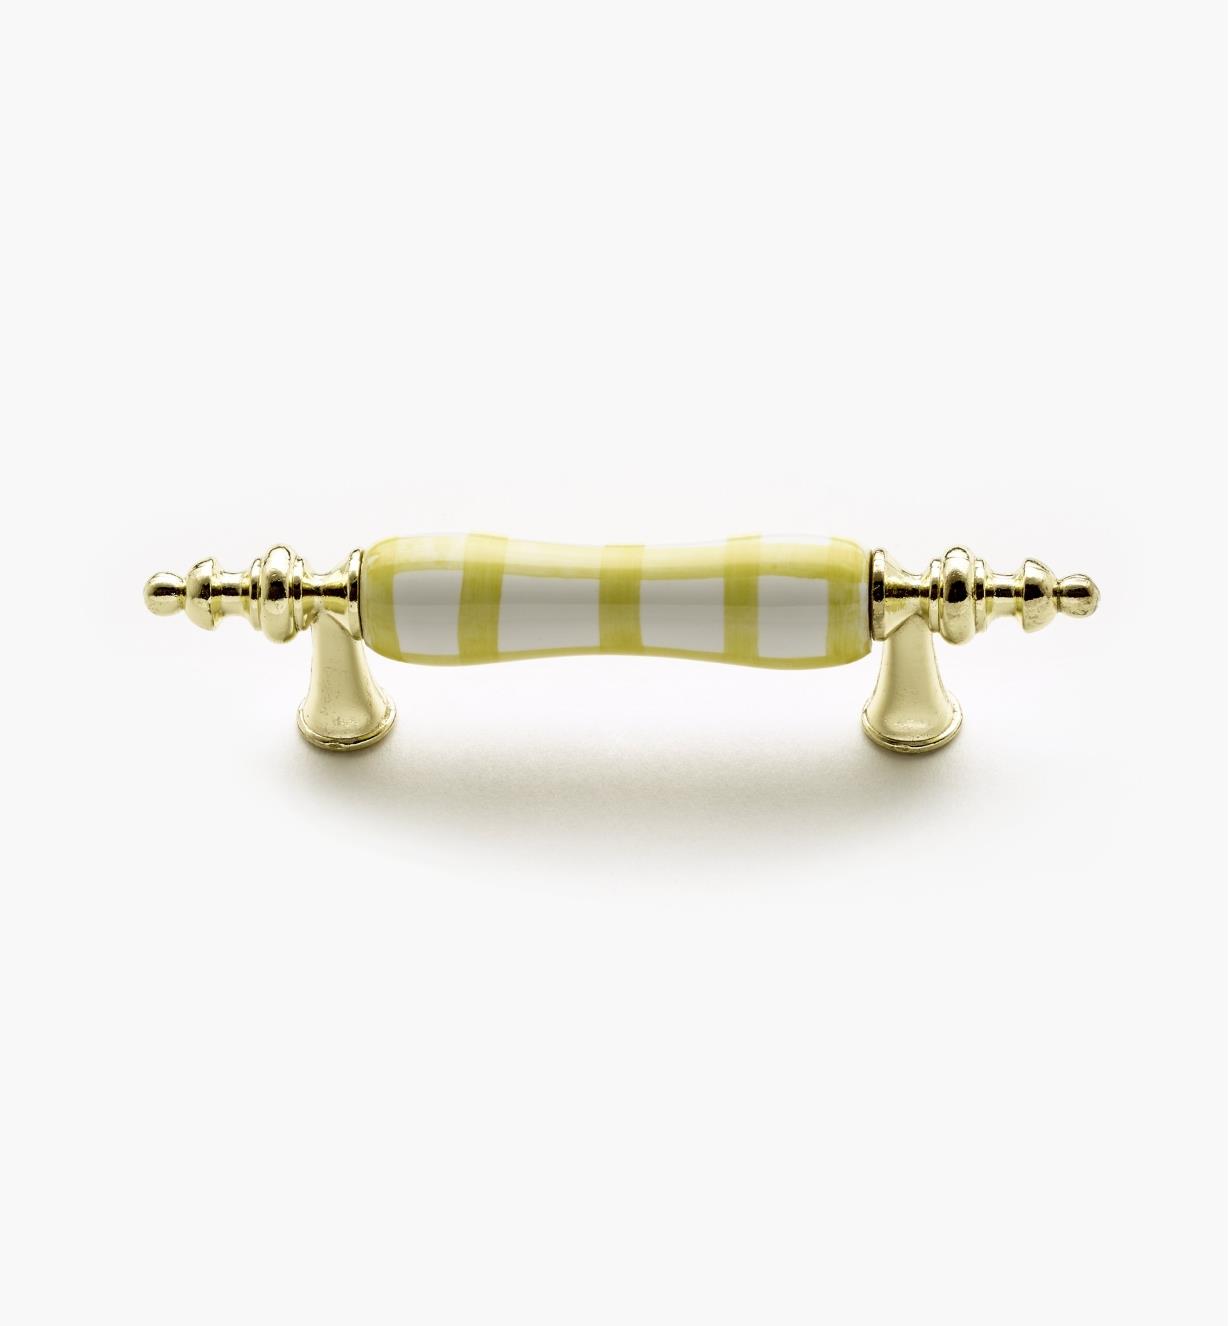 00W5243 - 76mm Yellow Ornate Pull